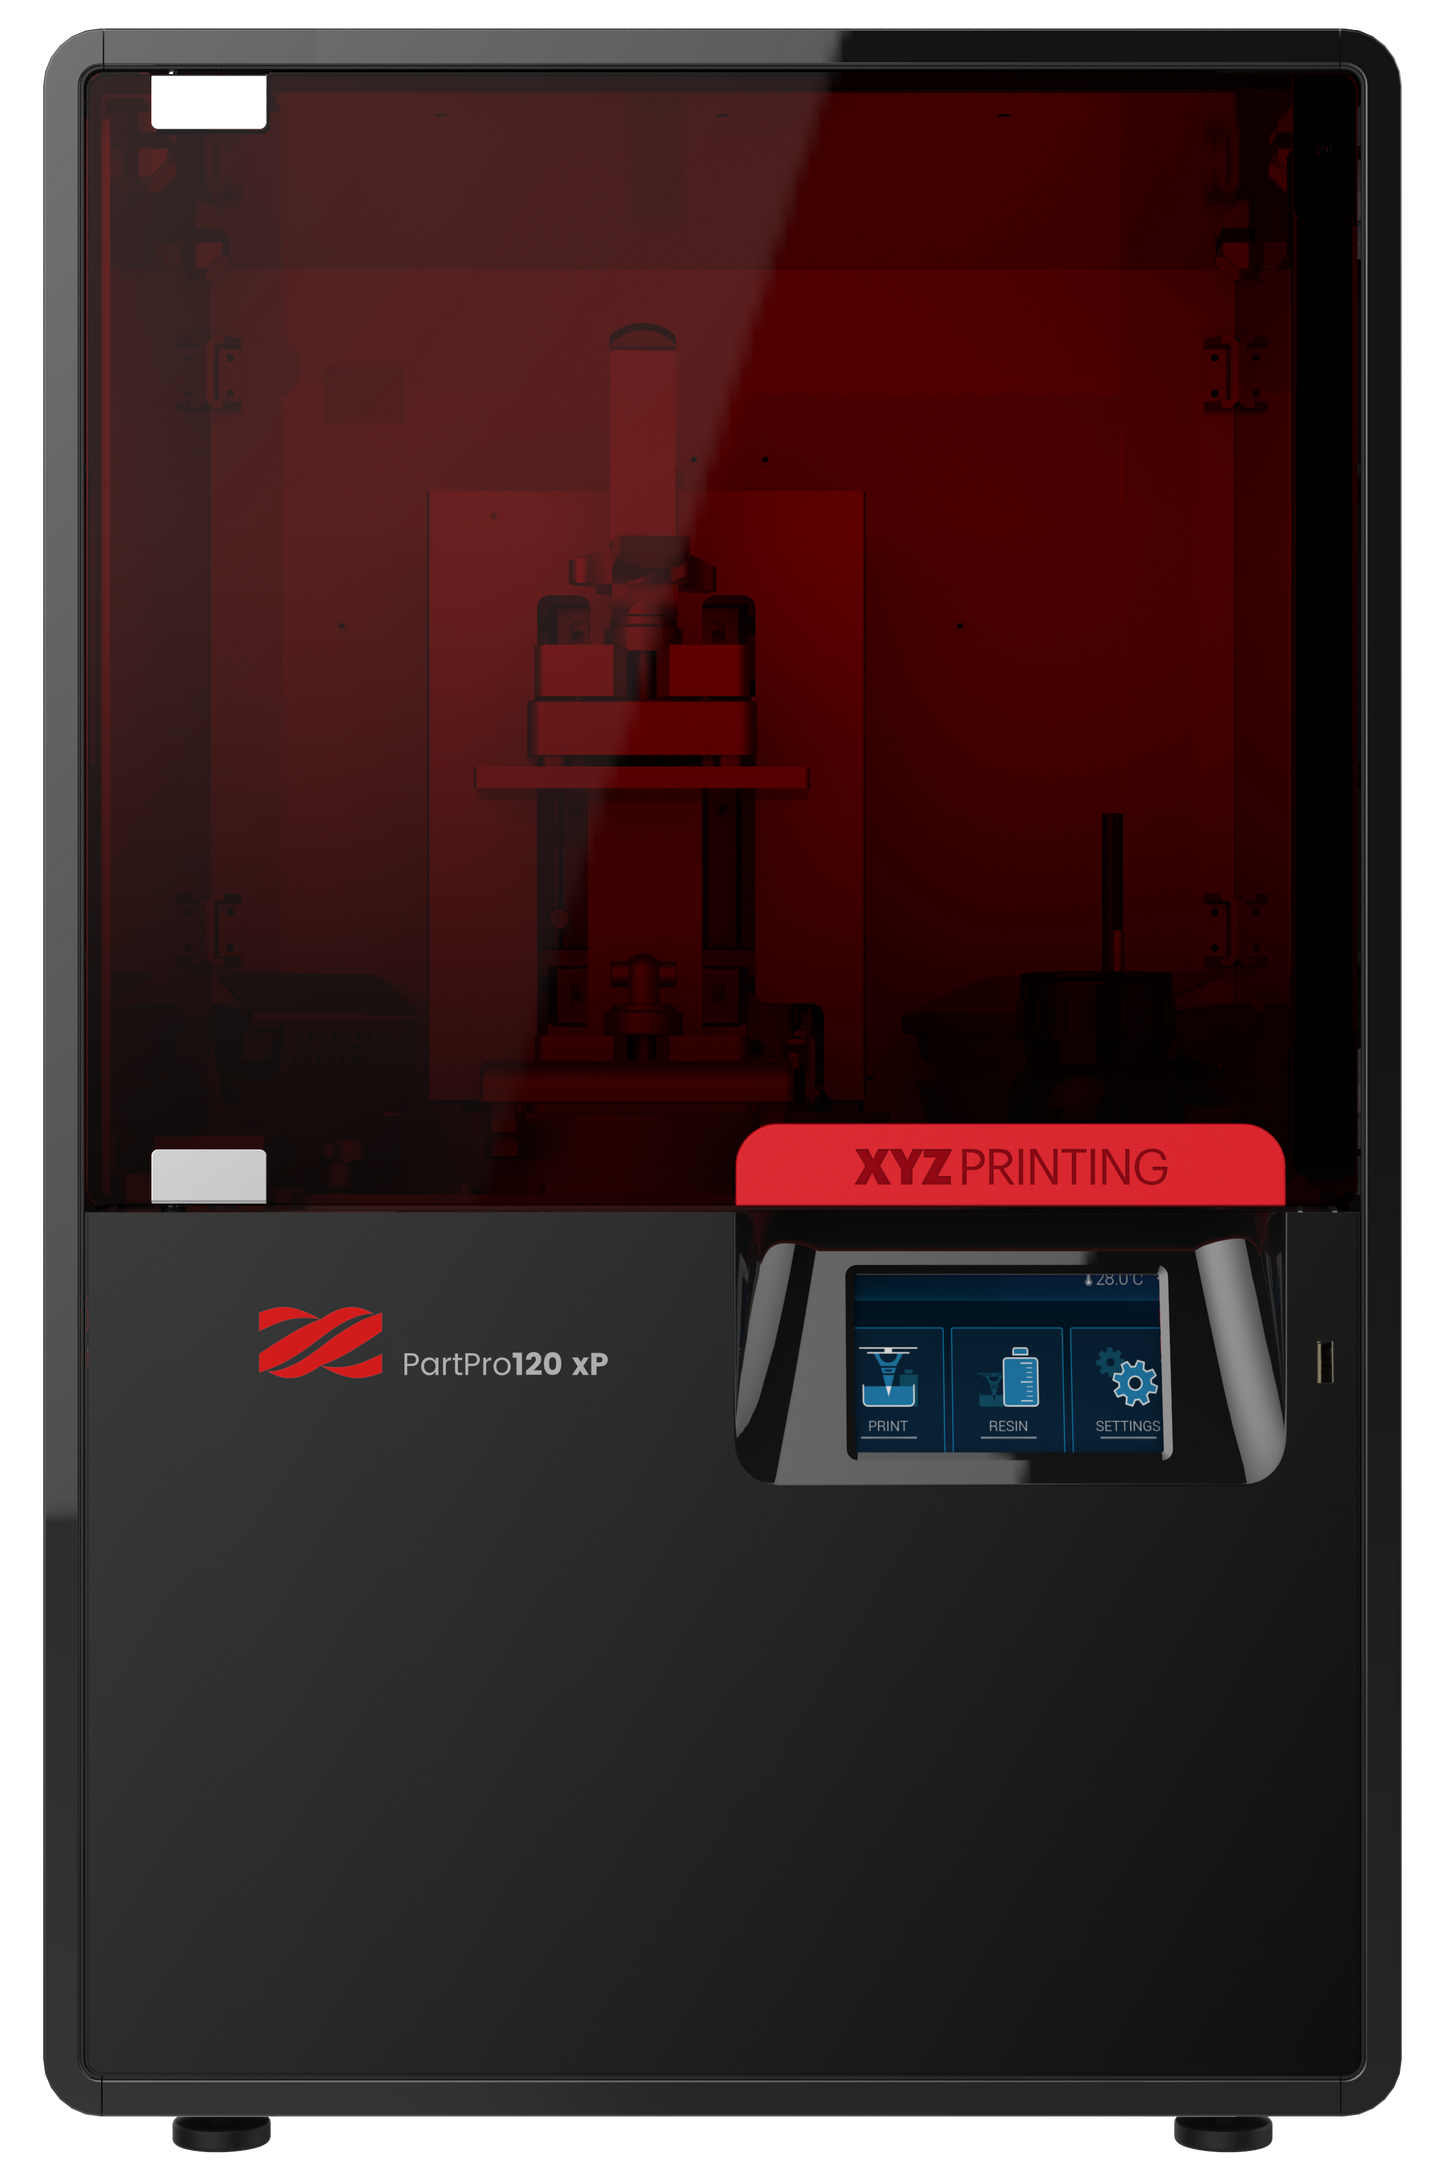 XYZ Printing (Professional) PartPro120 xP